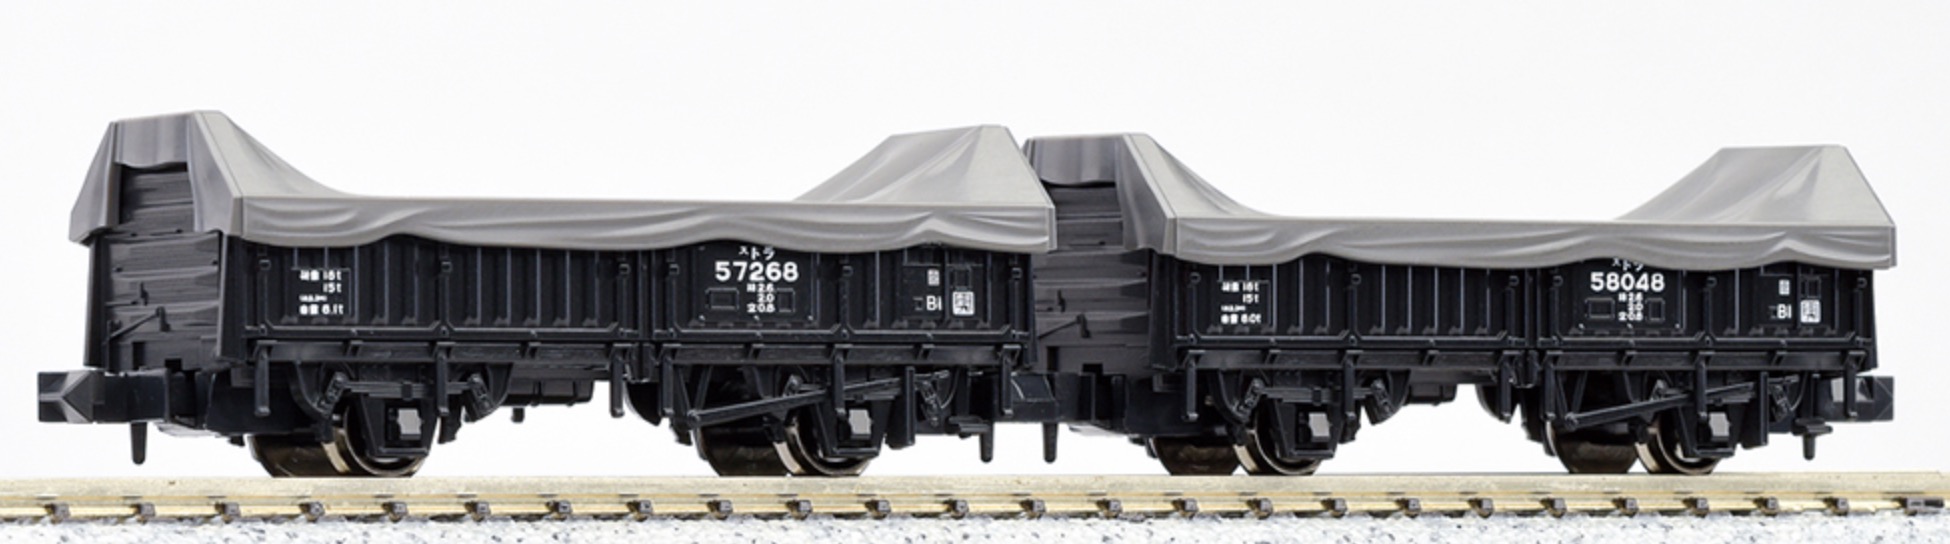 N Scale - Kato - 8068 - Gondola,Steel, Tora 55000 - Japan Railways Freight - 2-Car Set